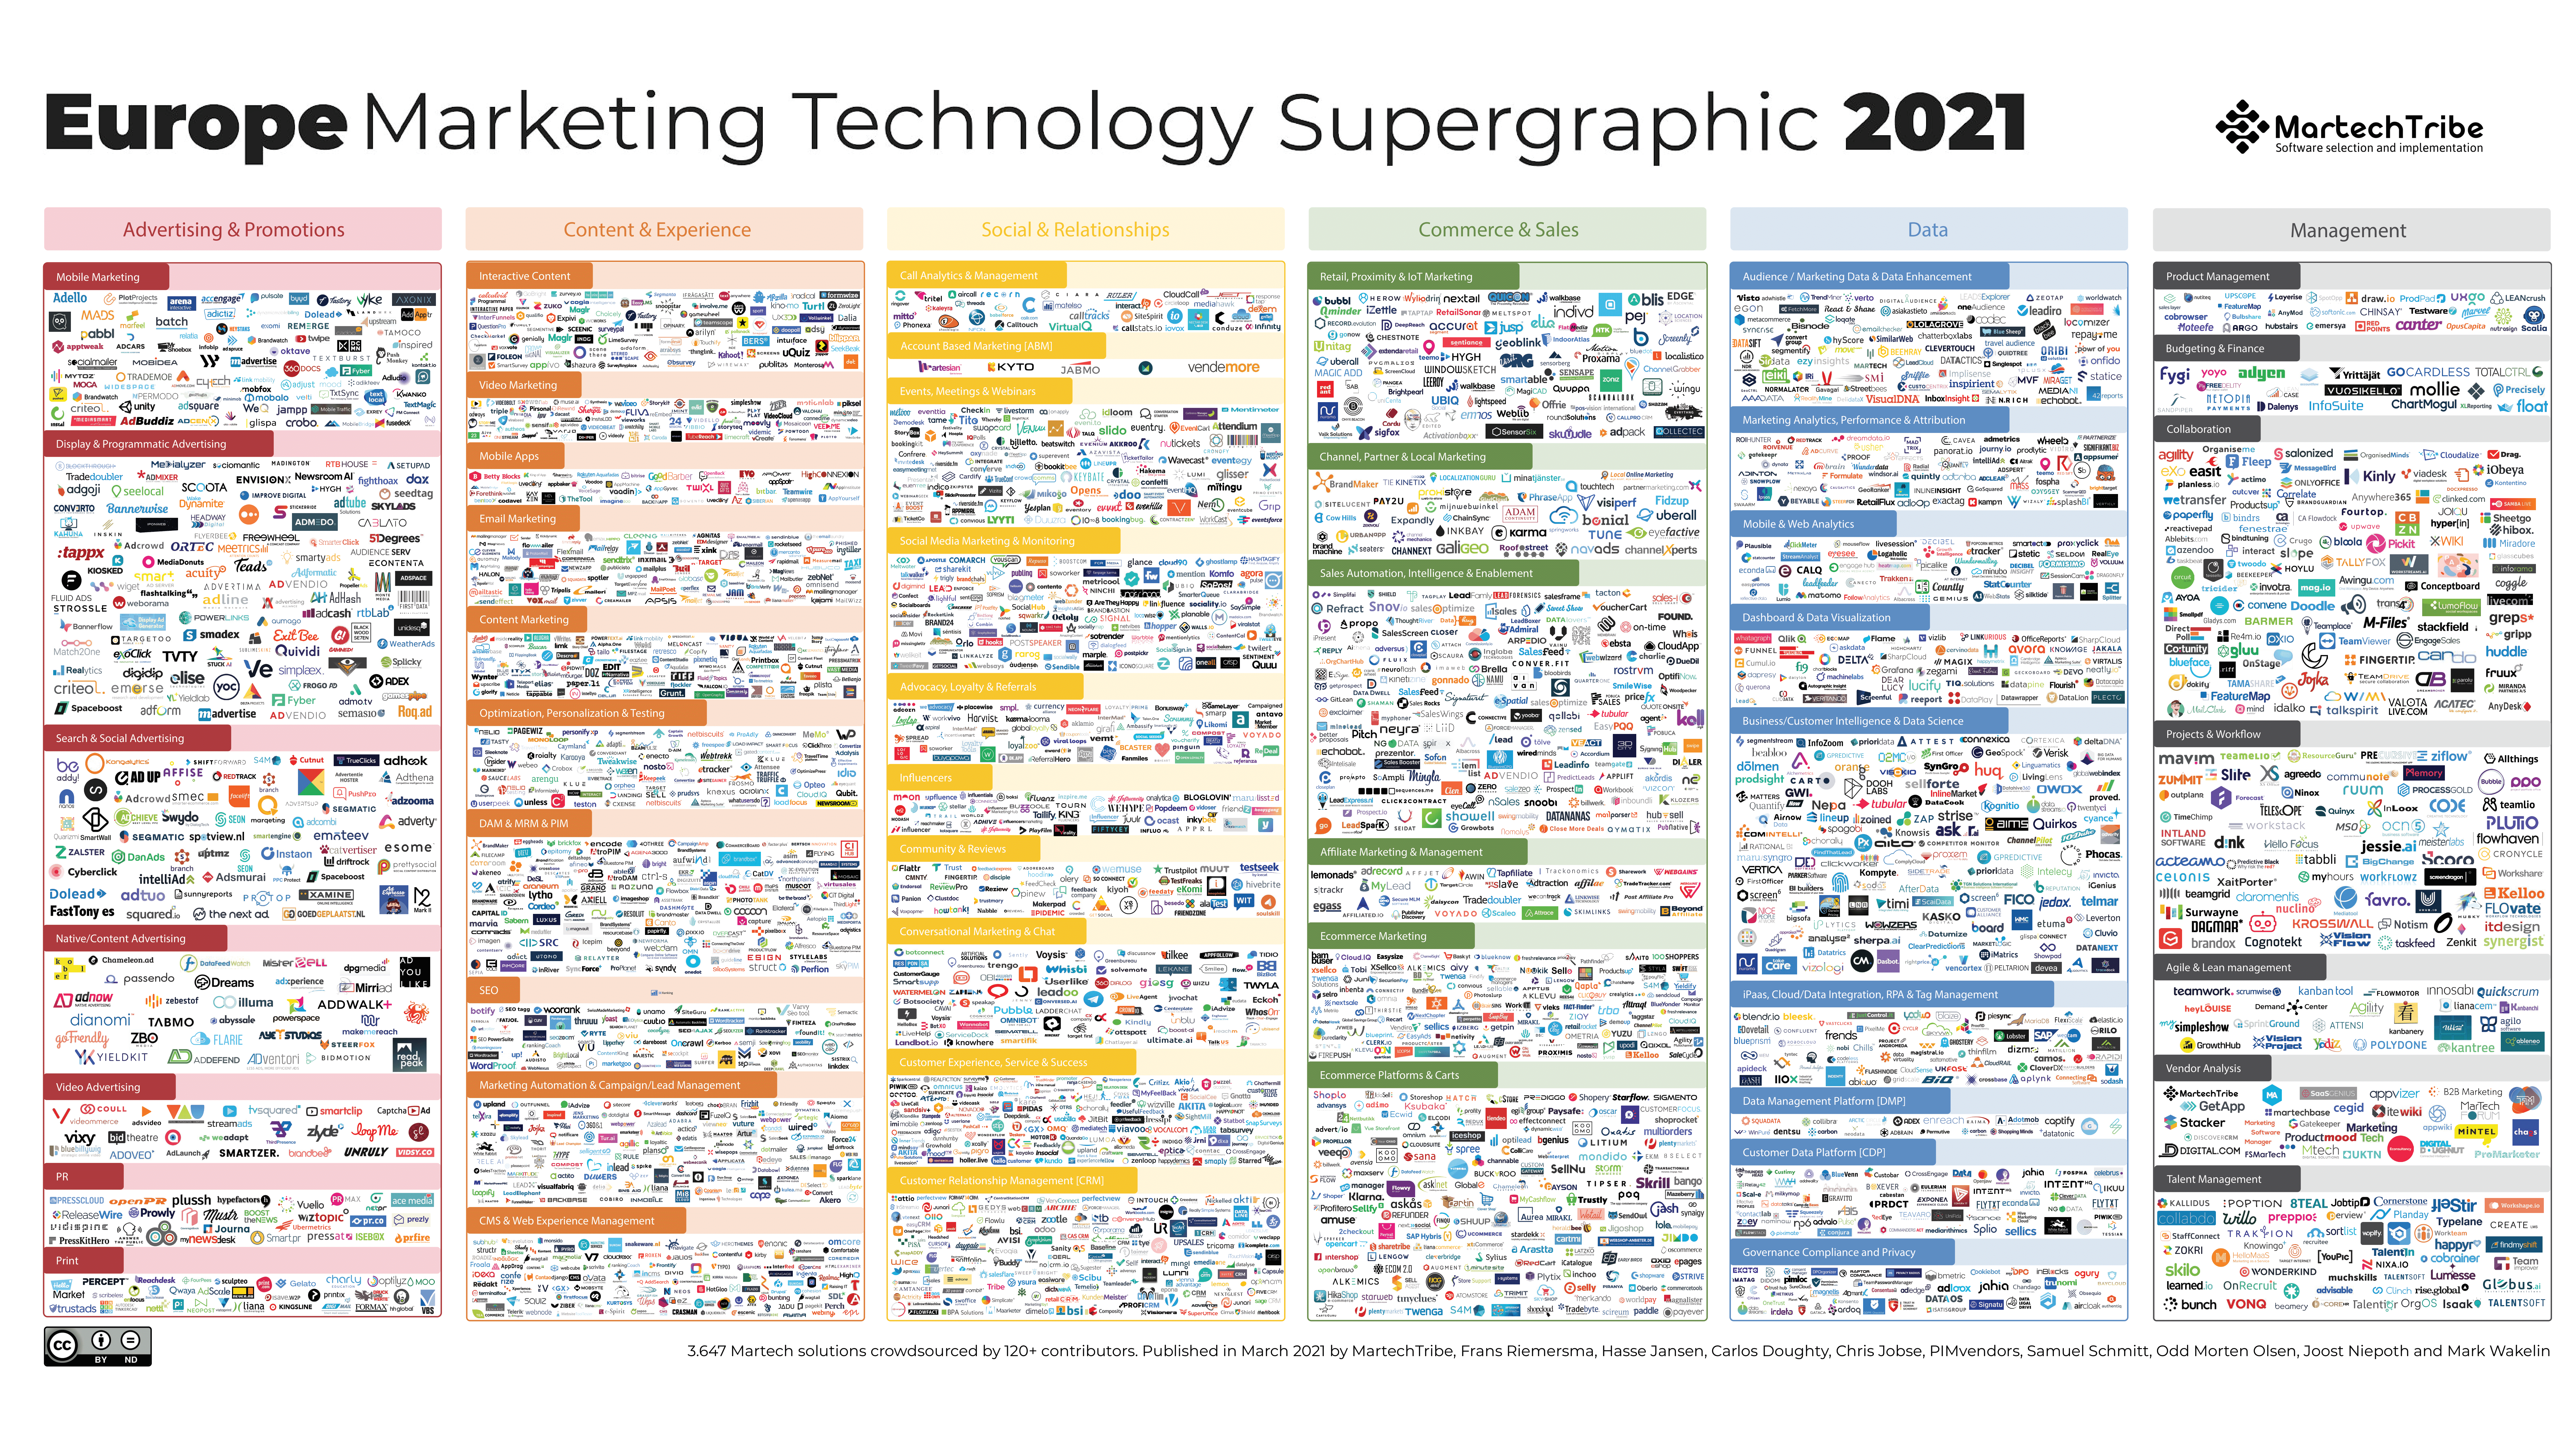 MartechTribe.com - Europe Marketing Technology Supergraphic 2021